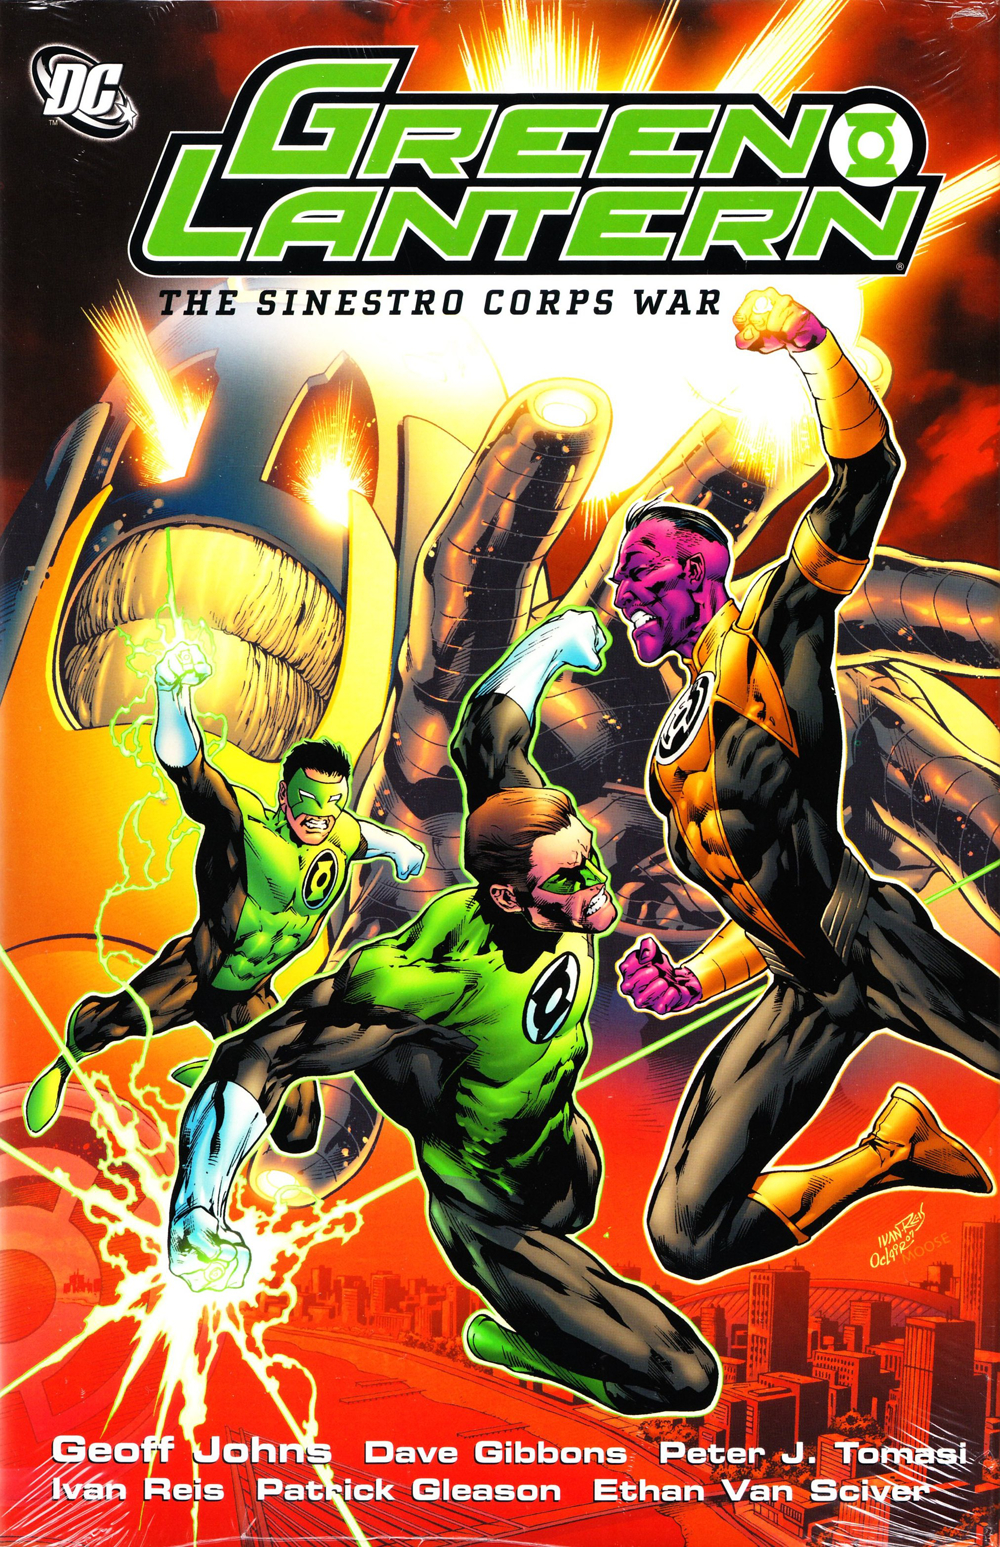 The sinestro corps war